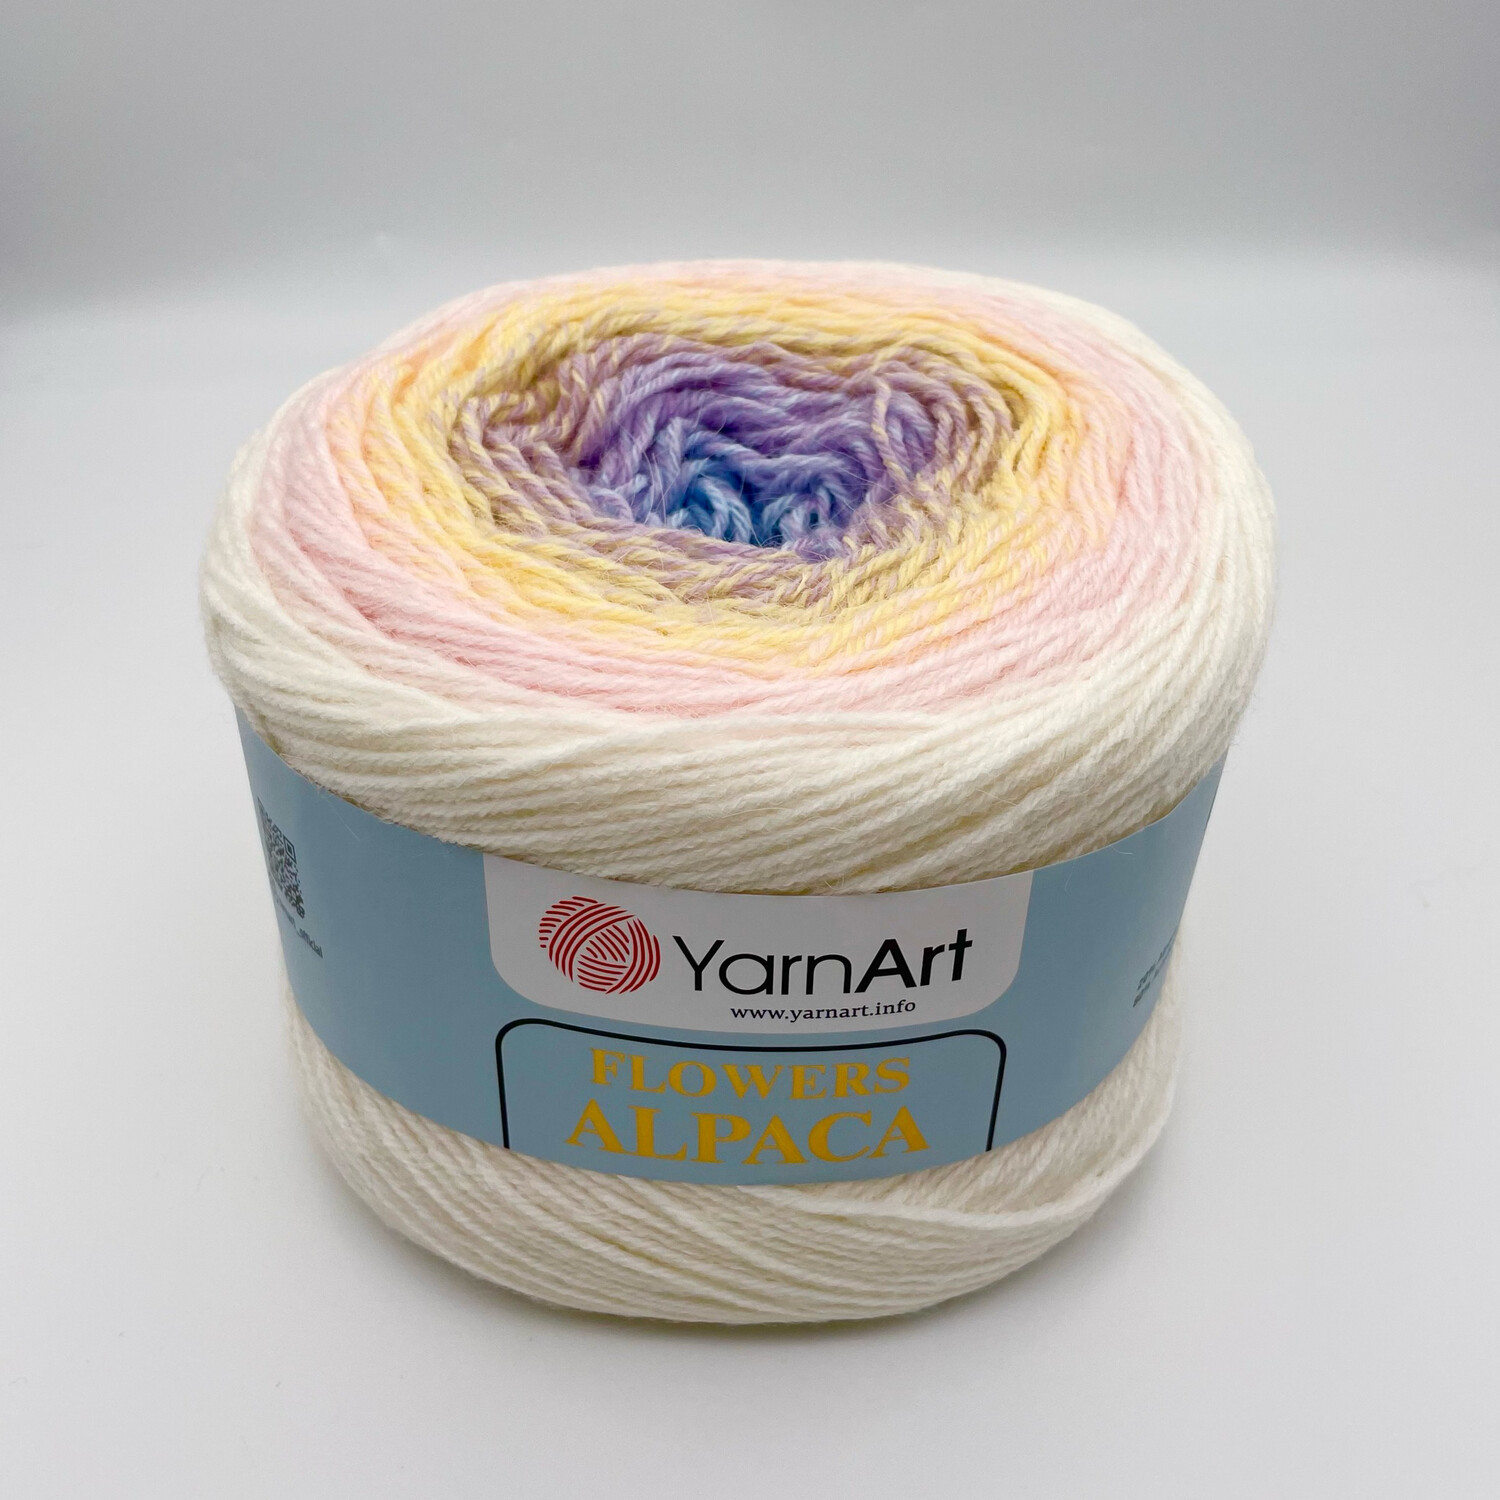 YarnArt Flowers Alpaca - 402